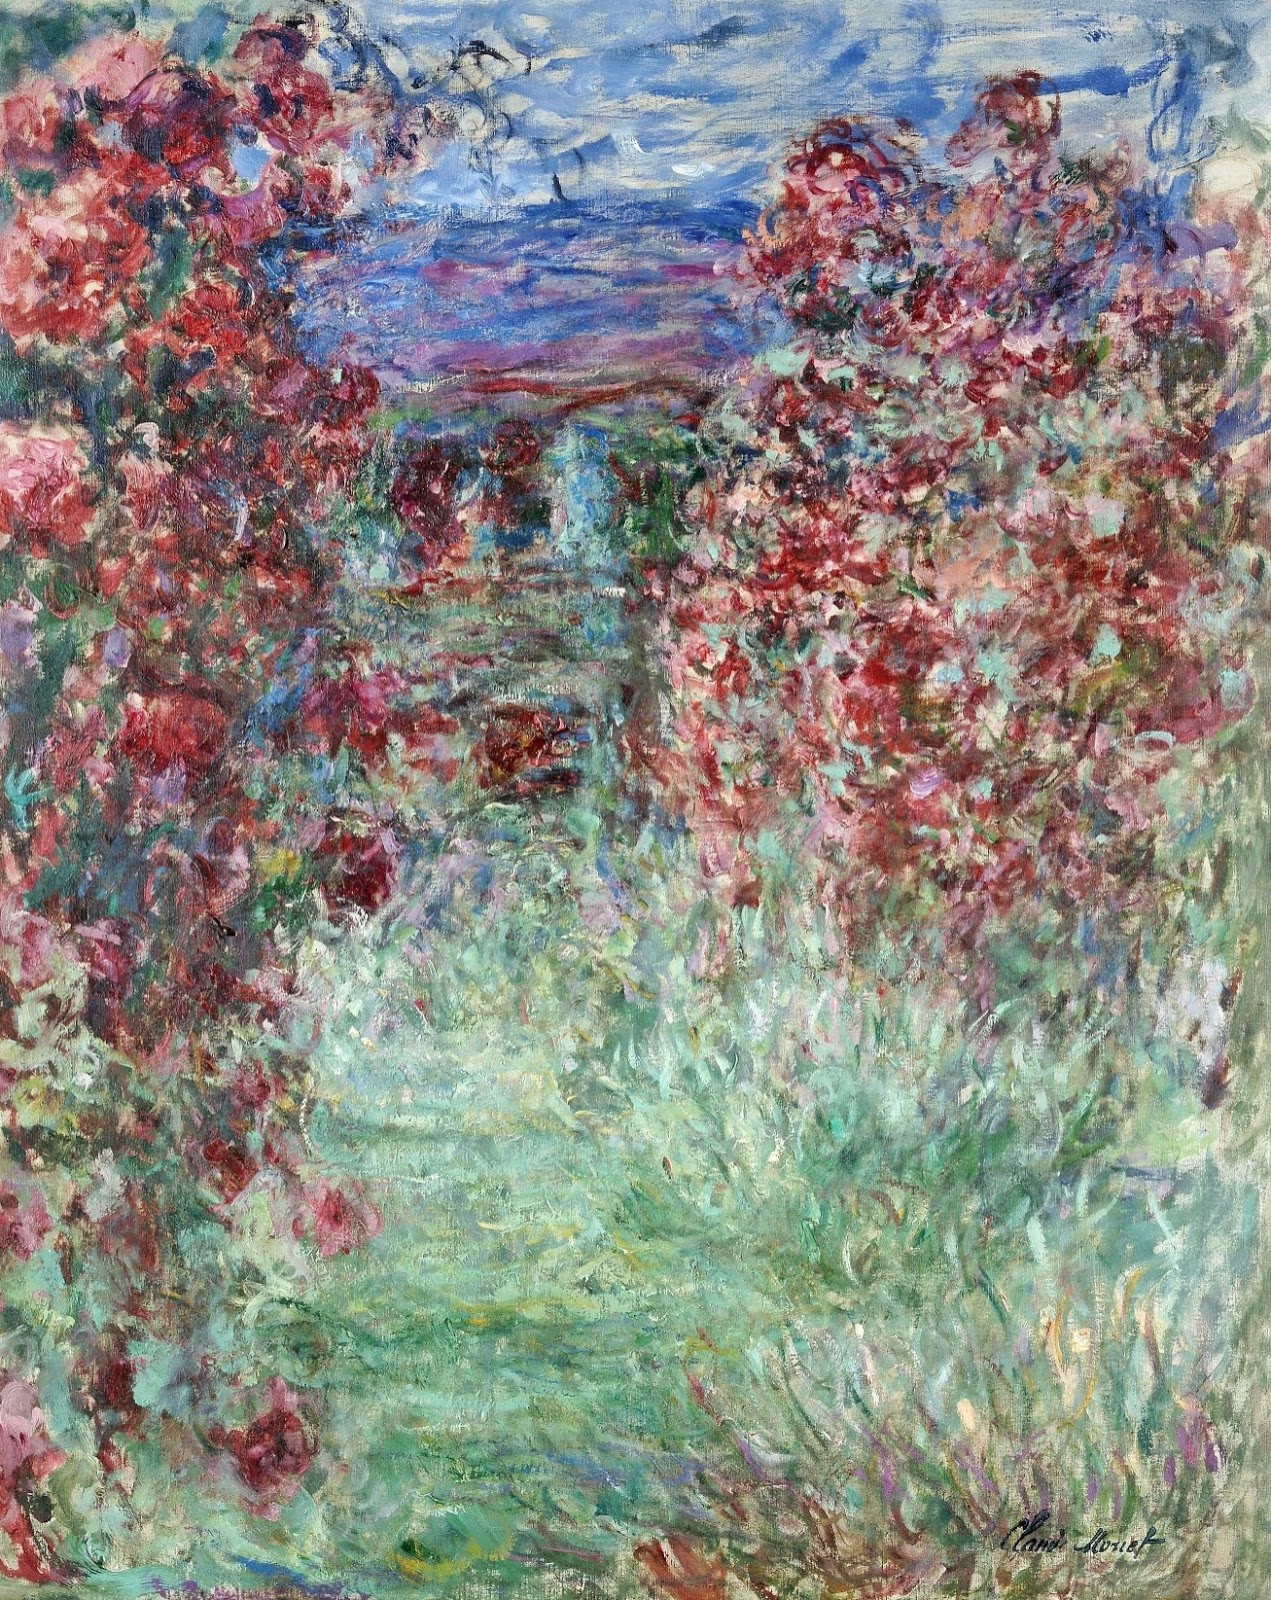 Claude+Monet-1840-1926 (366).jpg